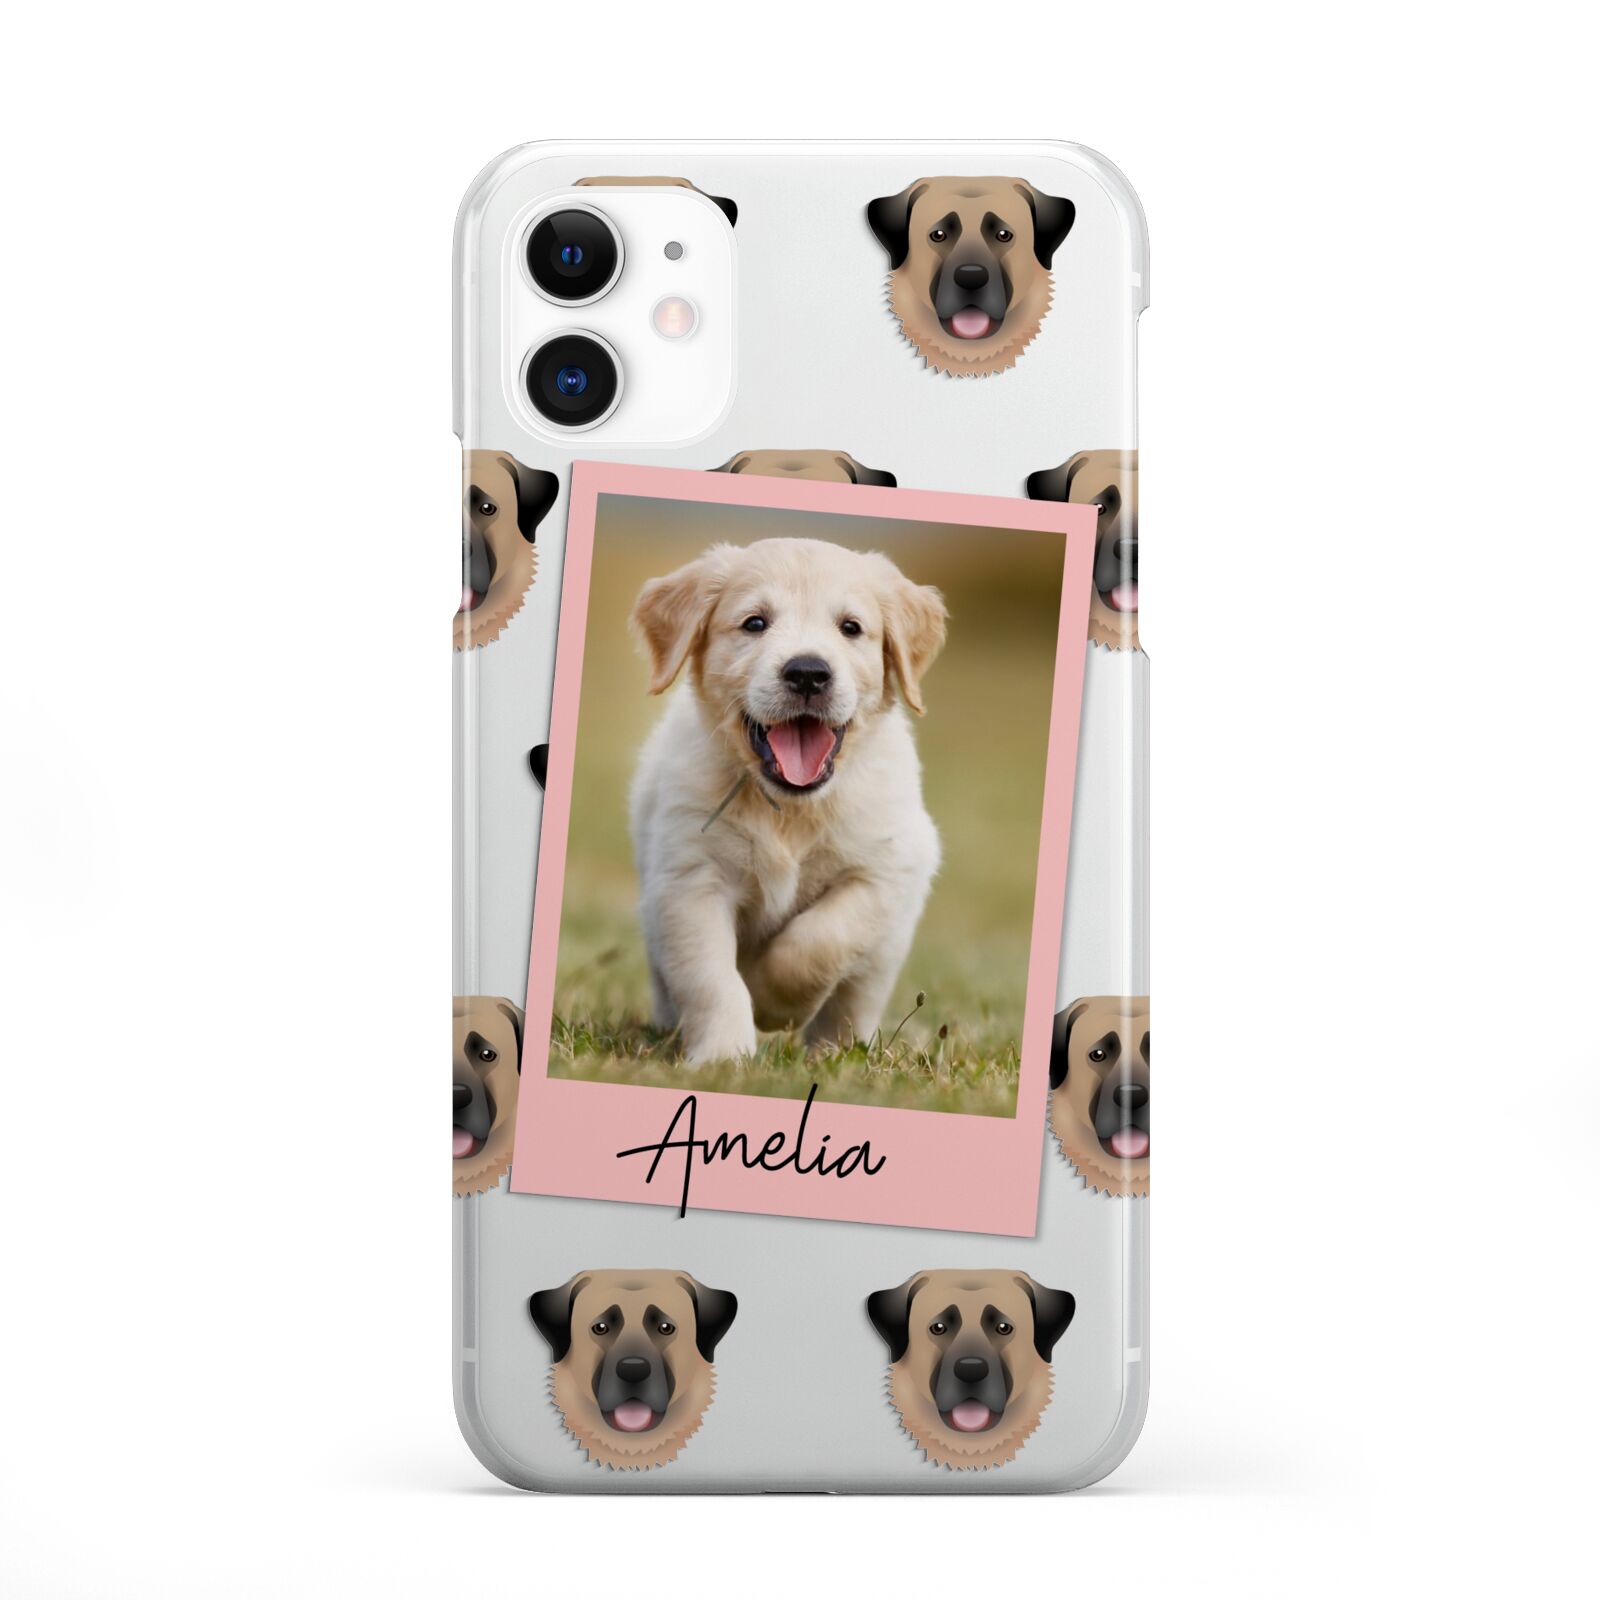 Personalised animal pet phone case